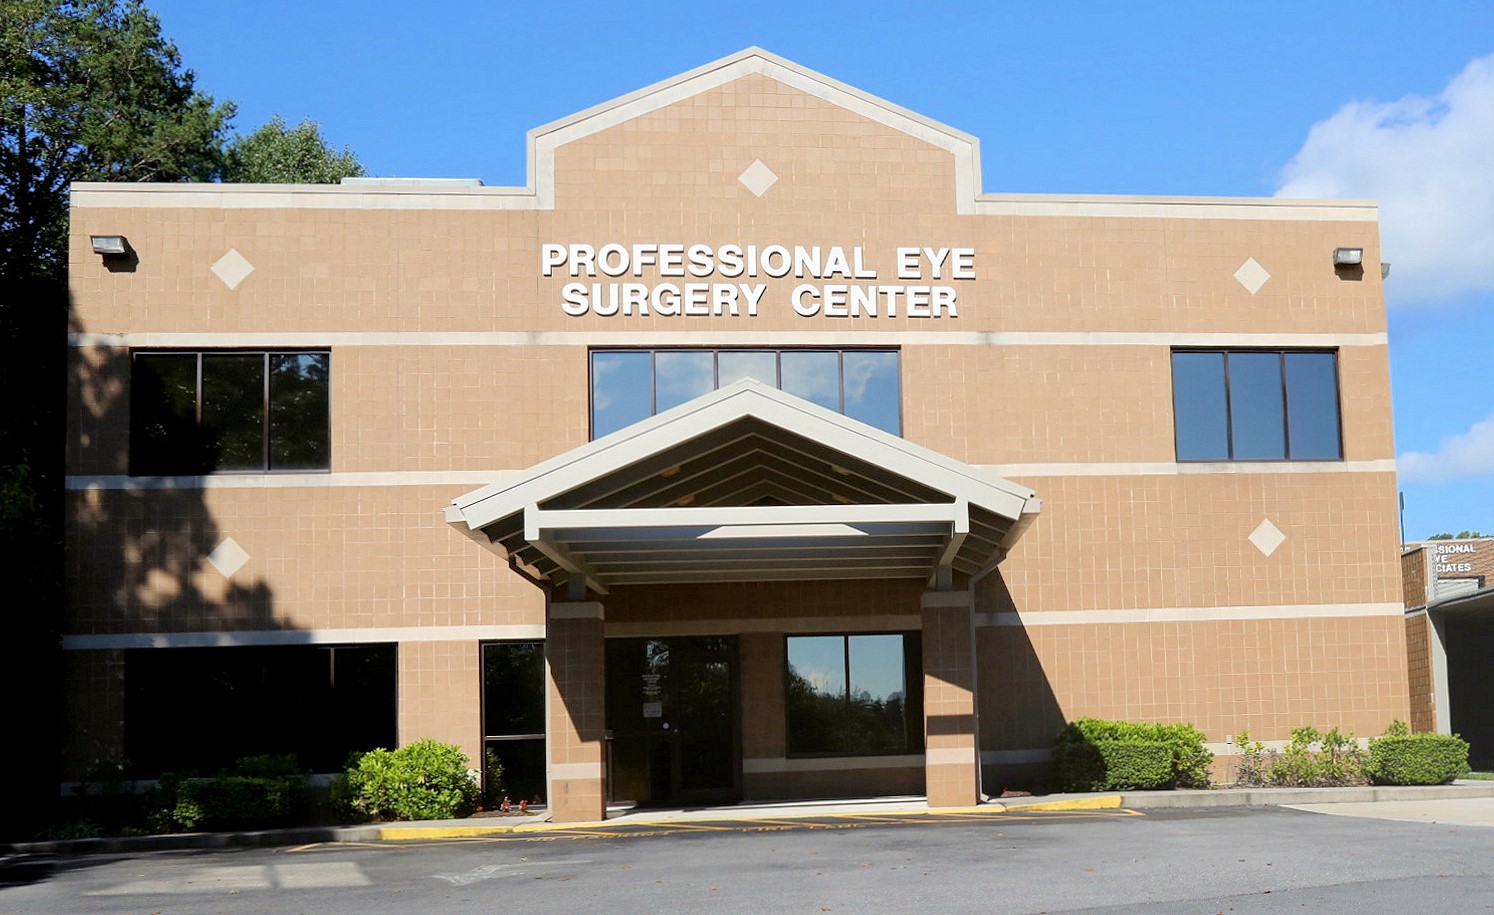 Surgery Center